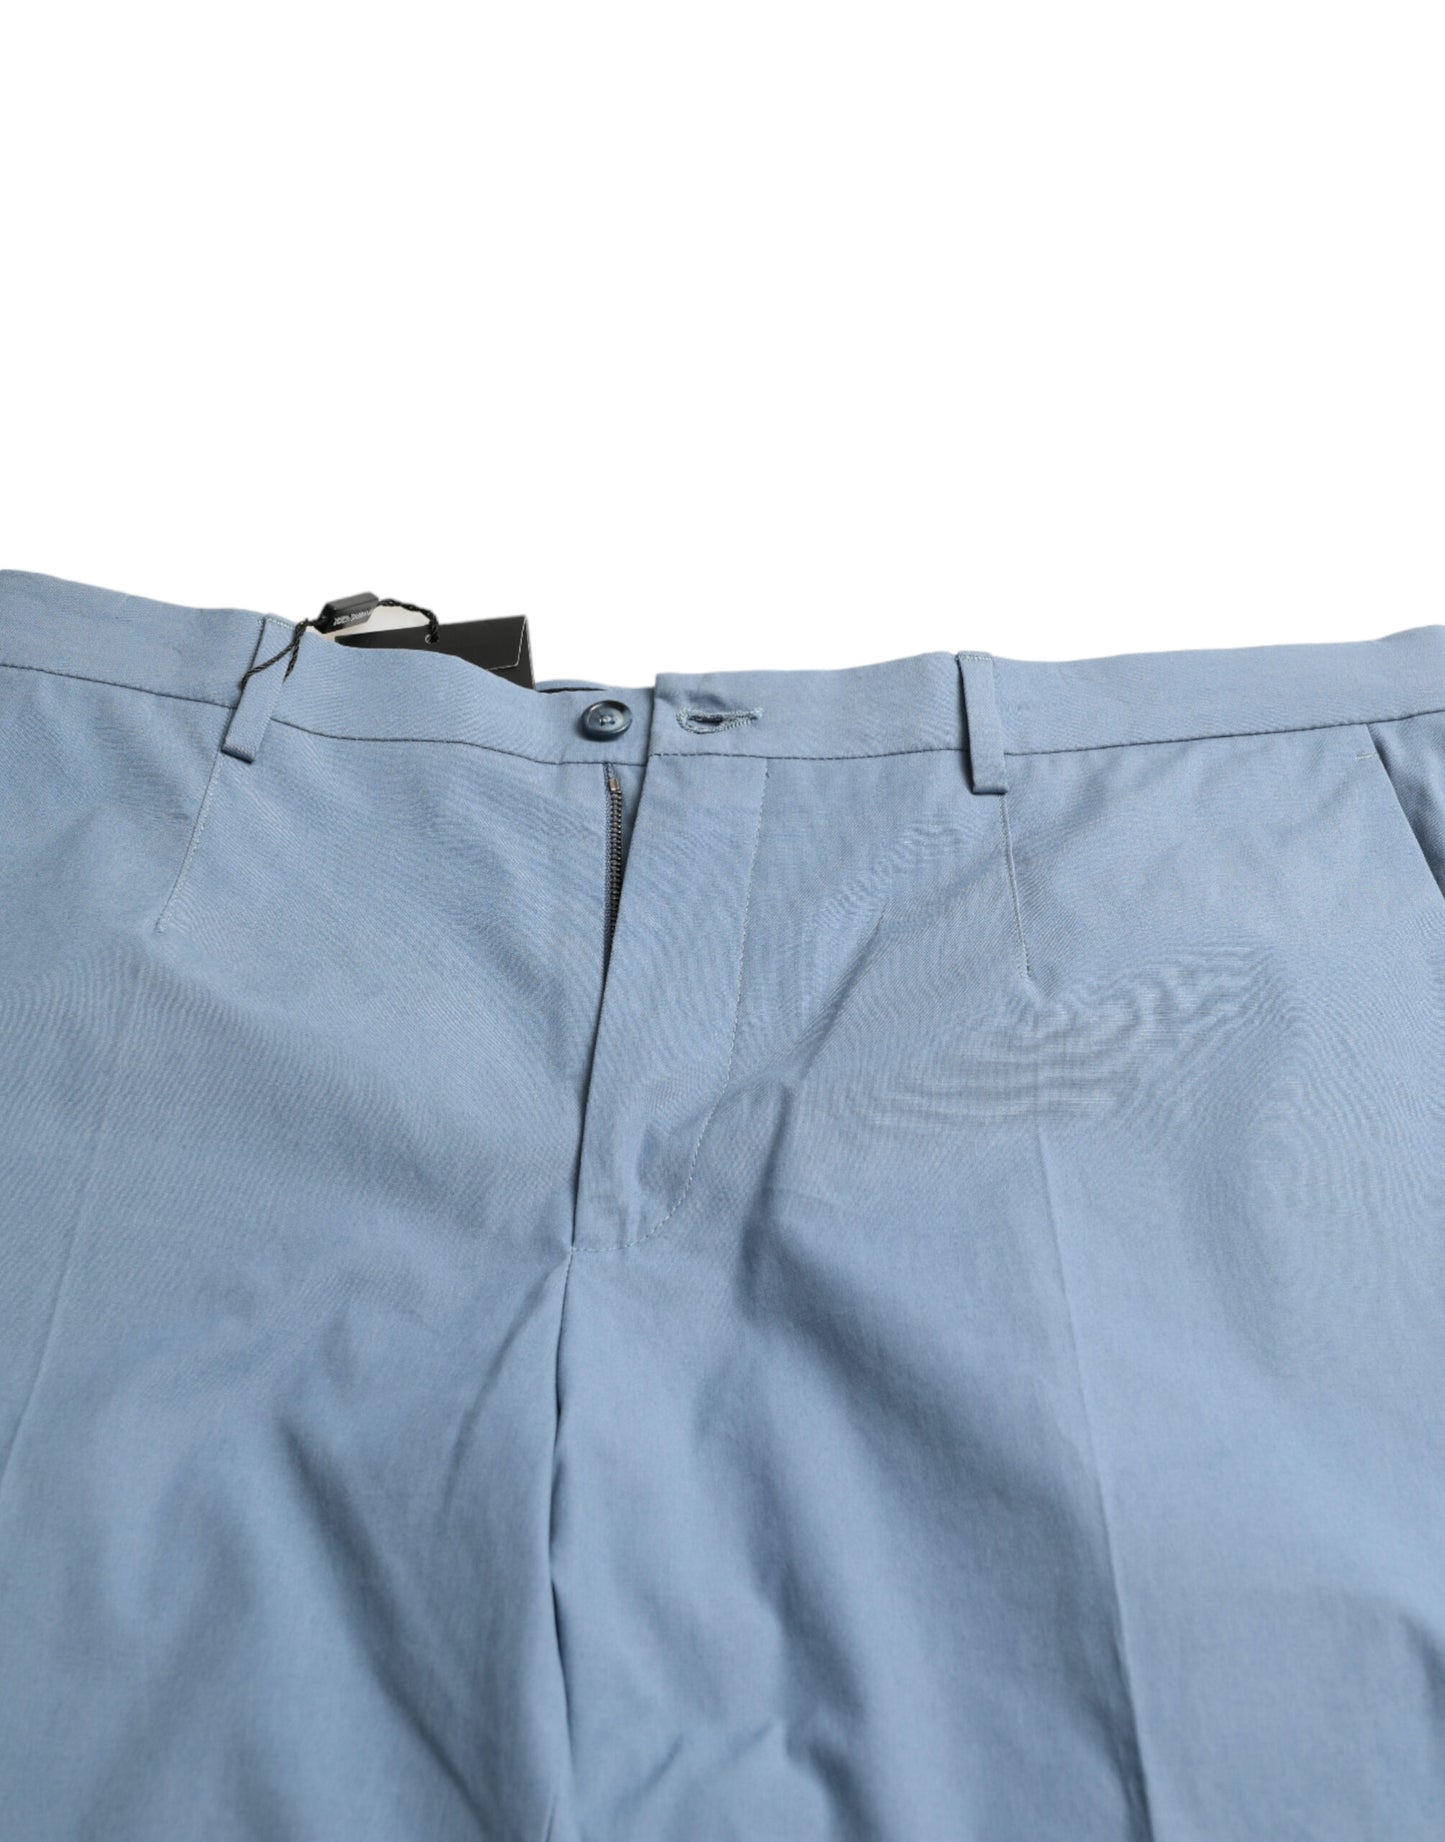 Sky Blue Cotton Bermuda Shorts